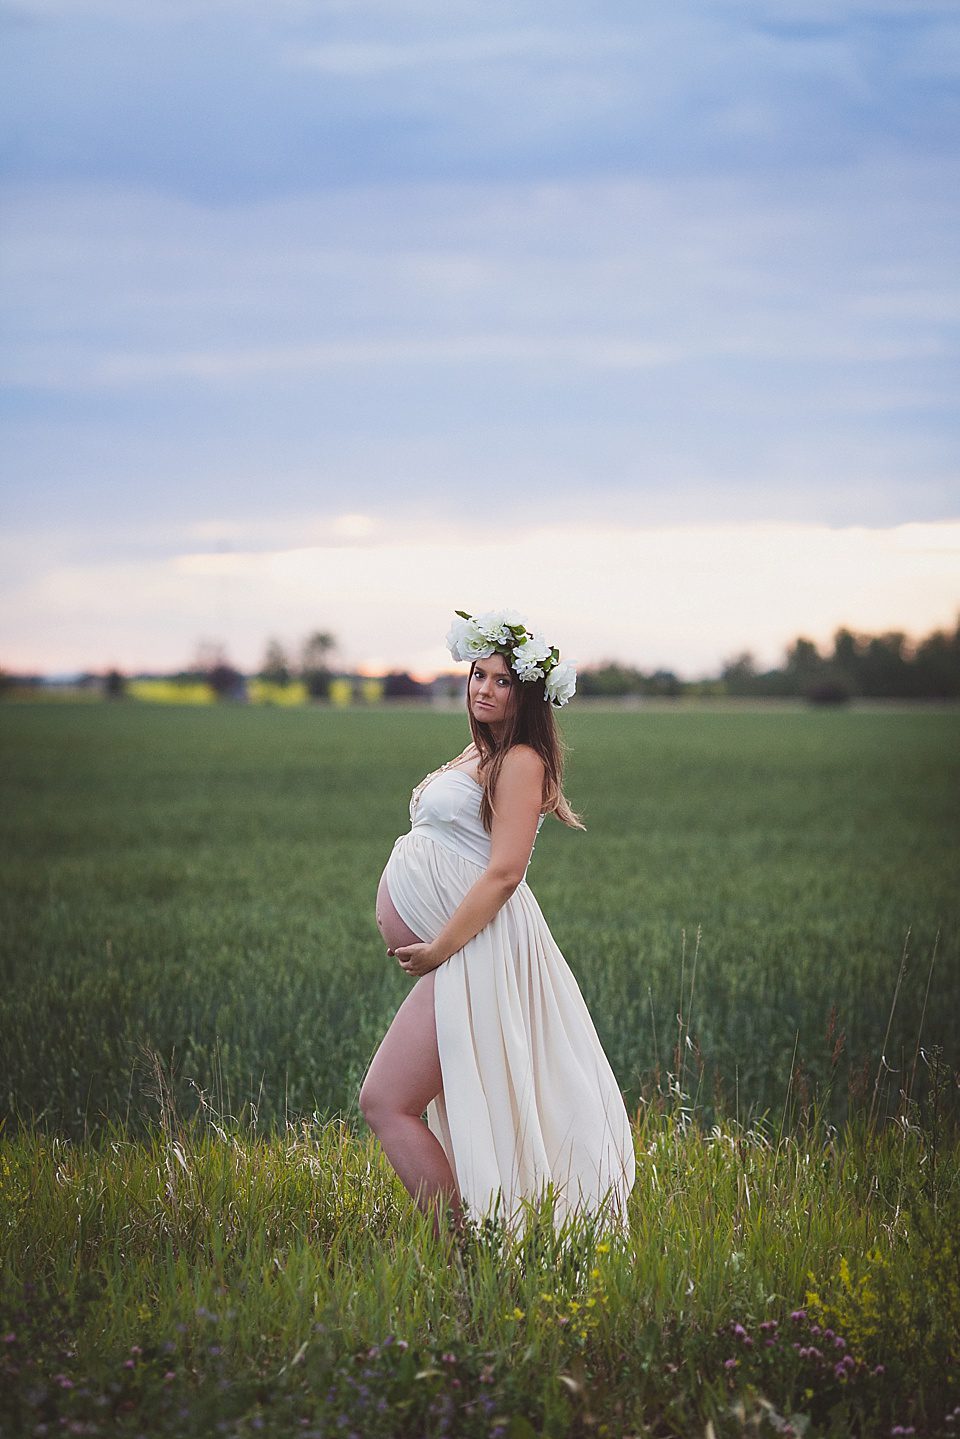 Edmonton Maternity Photographer, Edmonton Newborn Photographer, Edmonton Family Photographer, Edmonton Child Photographer